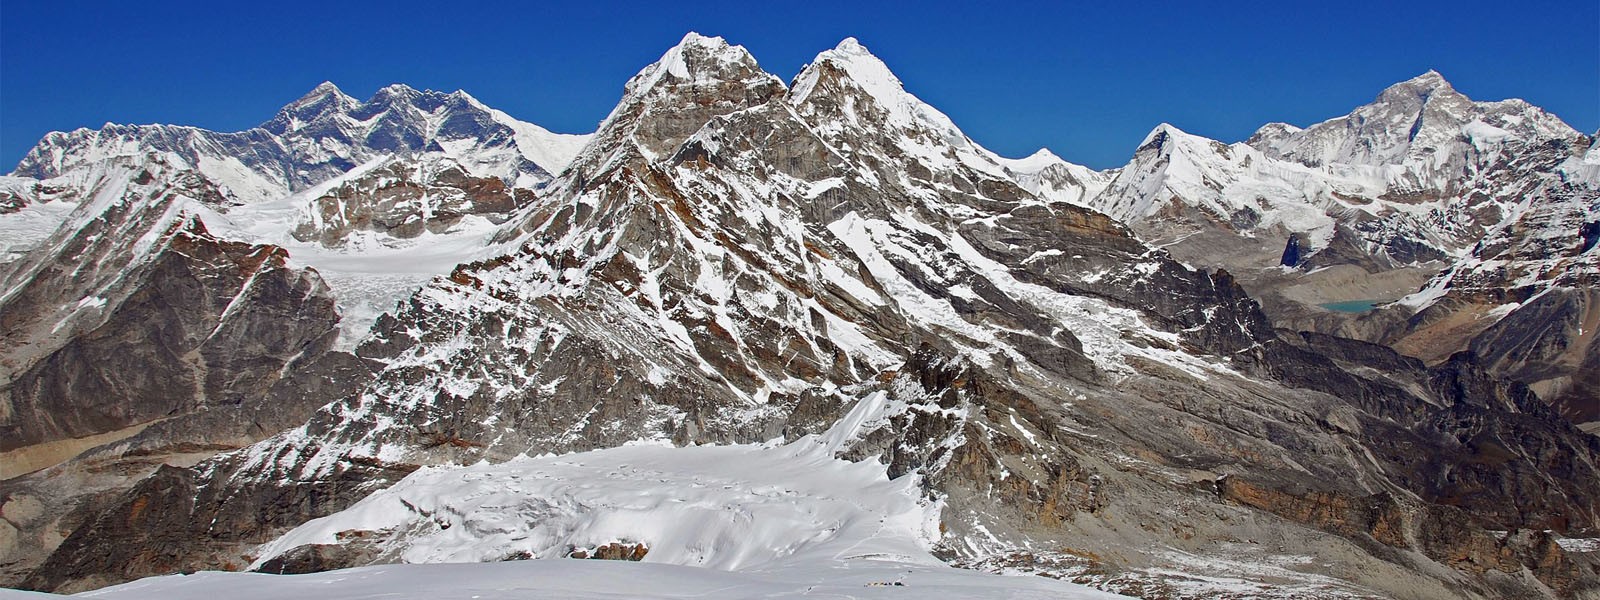 Mera Peak Climbing with Sherpani Col Pass to Makalu Base Camp Trekking